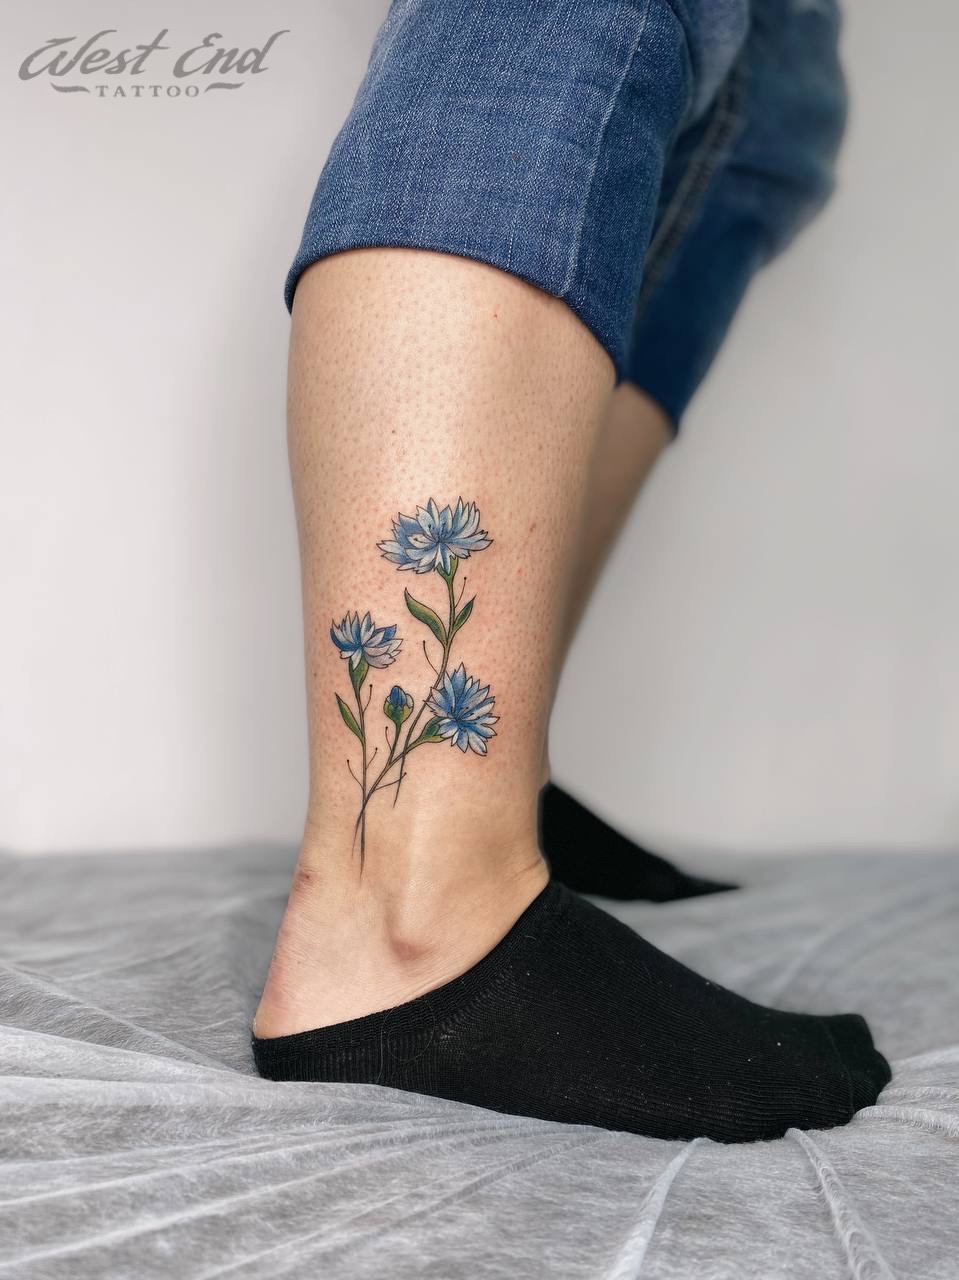 био тату цветов на ноге | Tattoo Academy